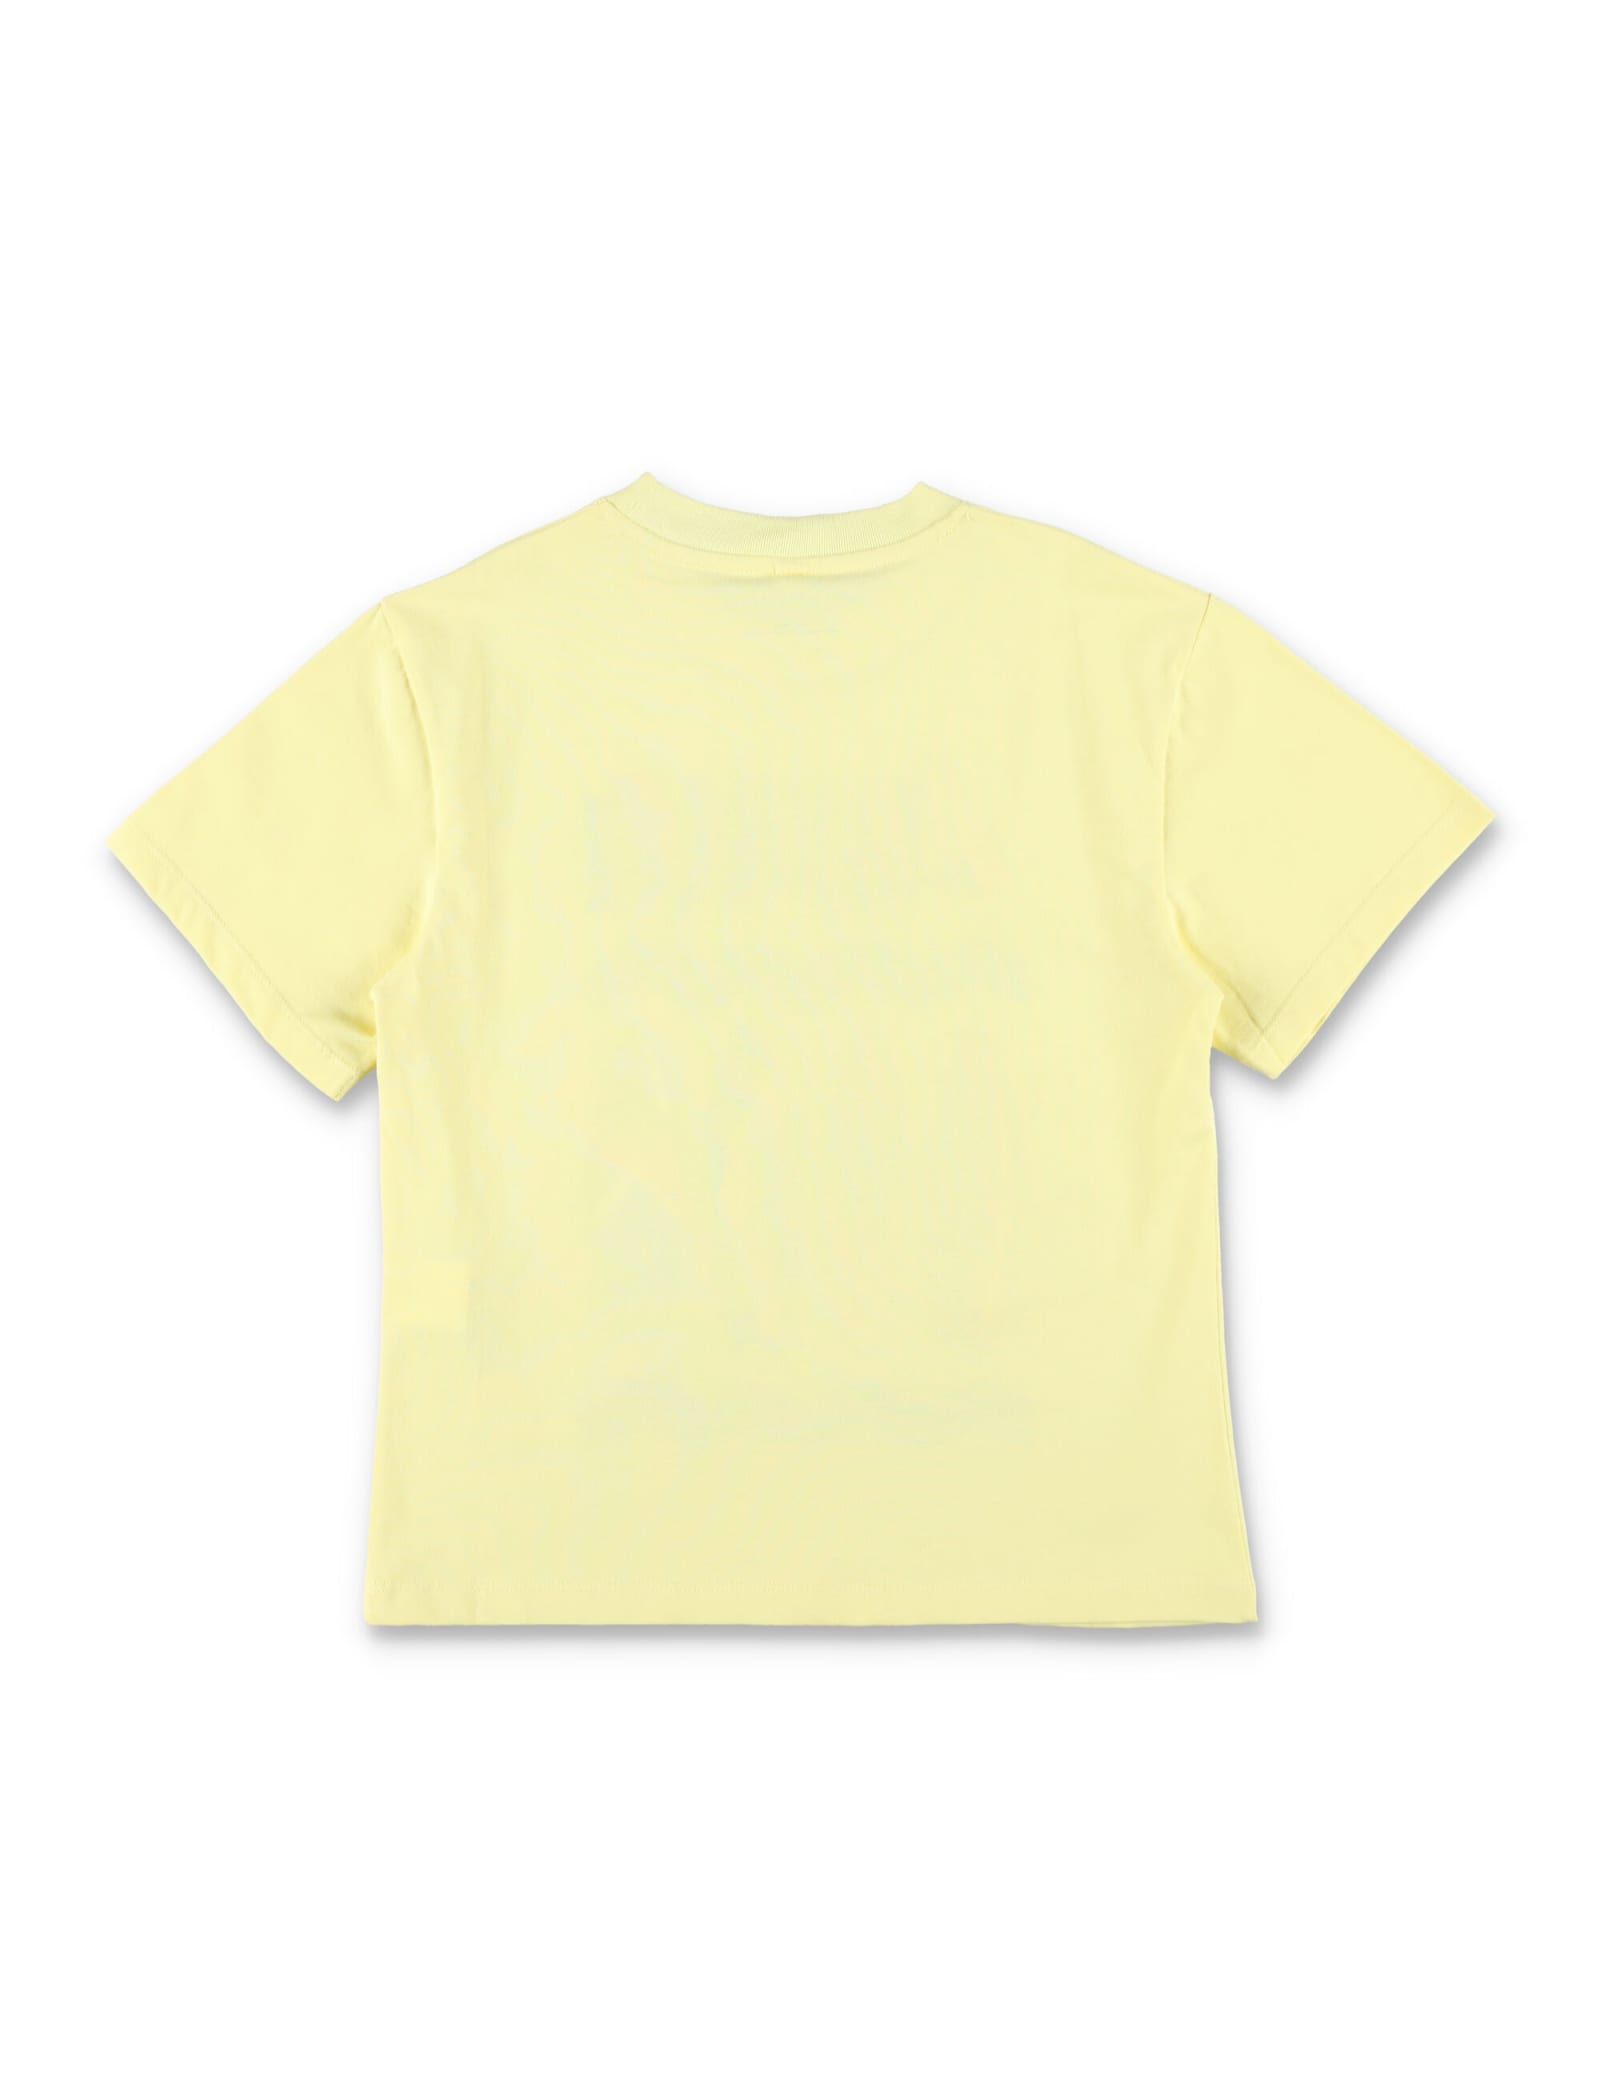 Shop Stella Mccartney Aloha Surfboards T-shirt In Light Yellow